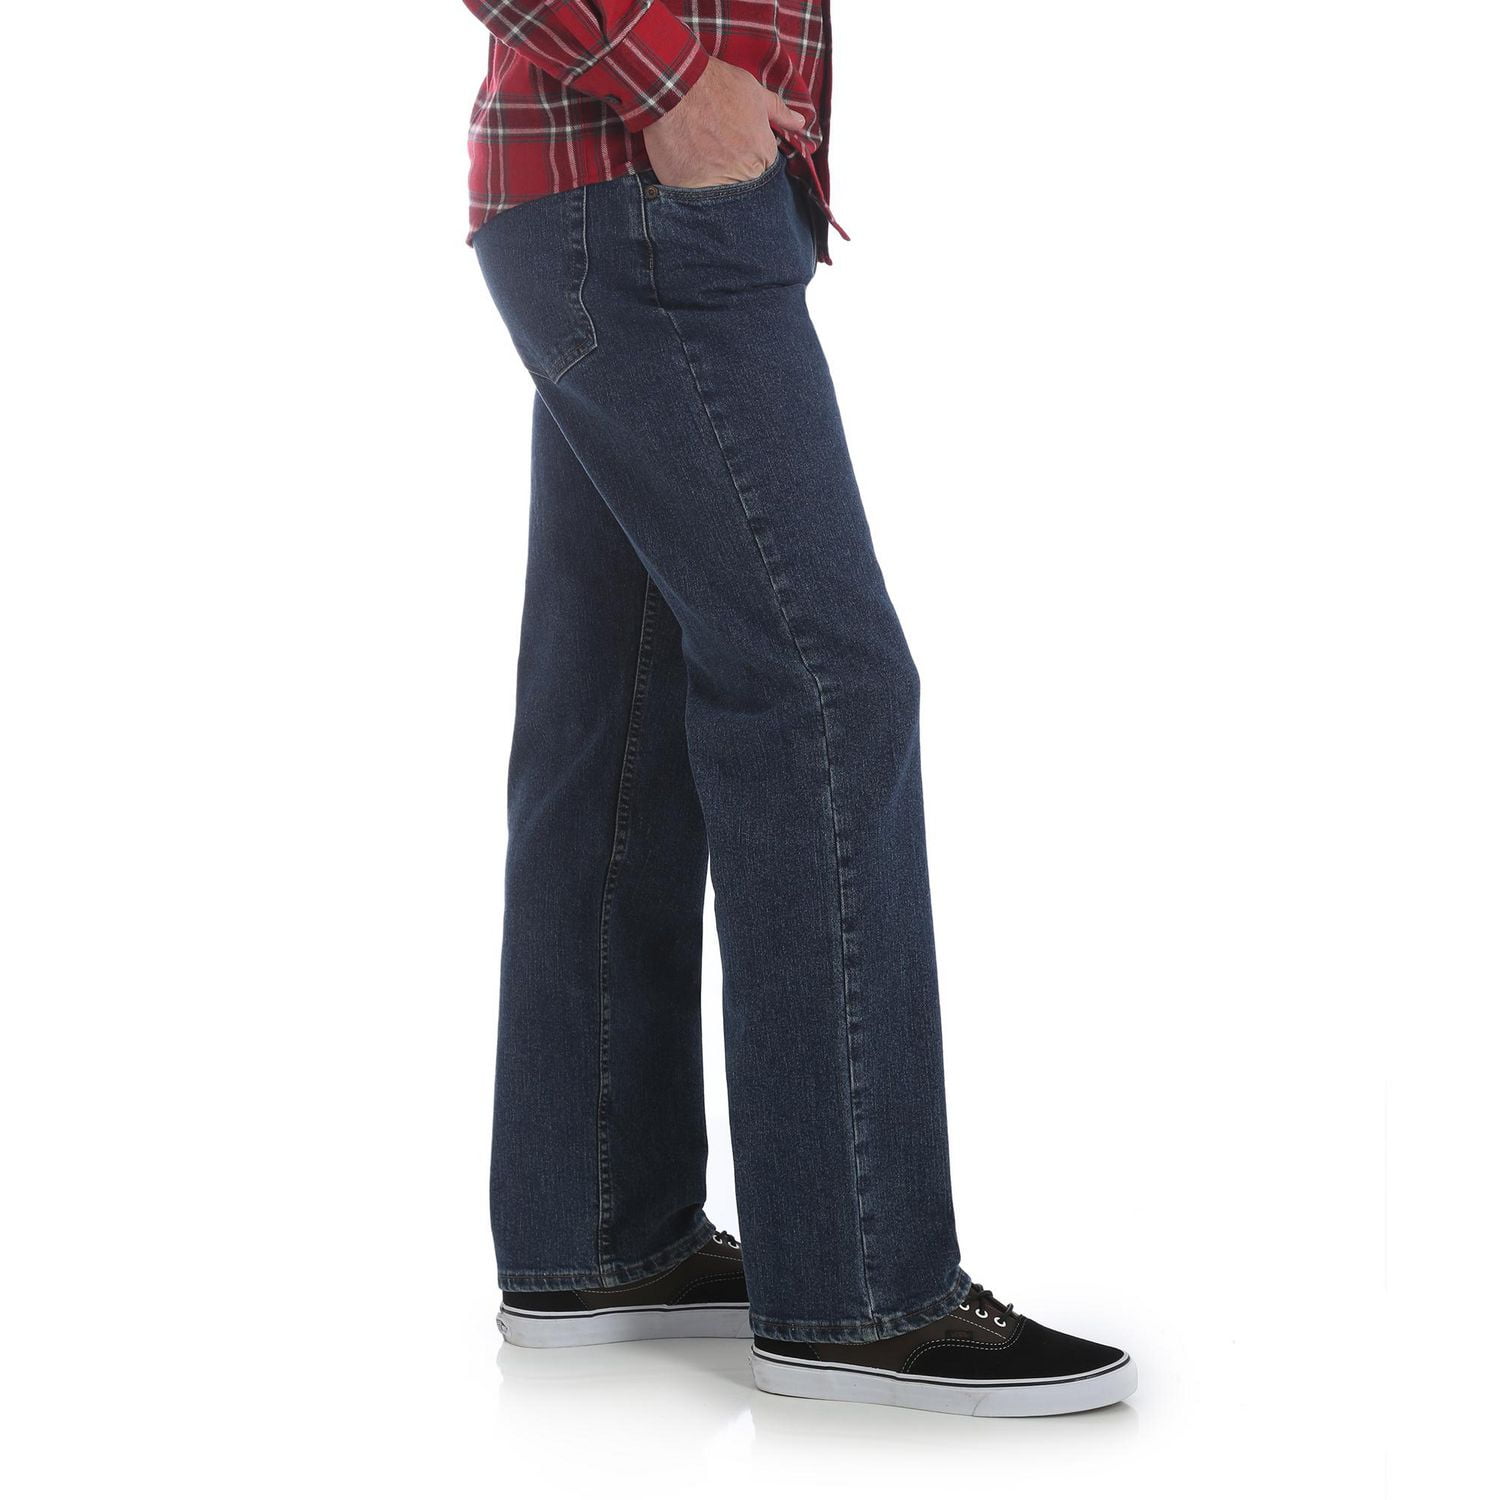 Wrangler Men's Regular Fit Stretch Jeans